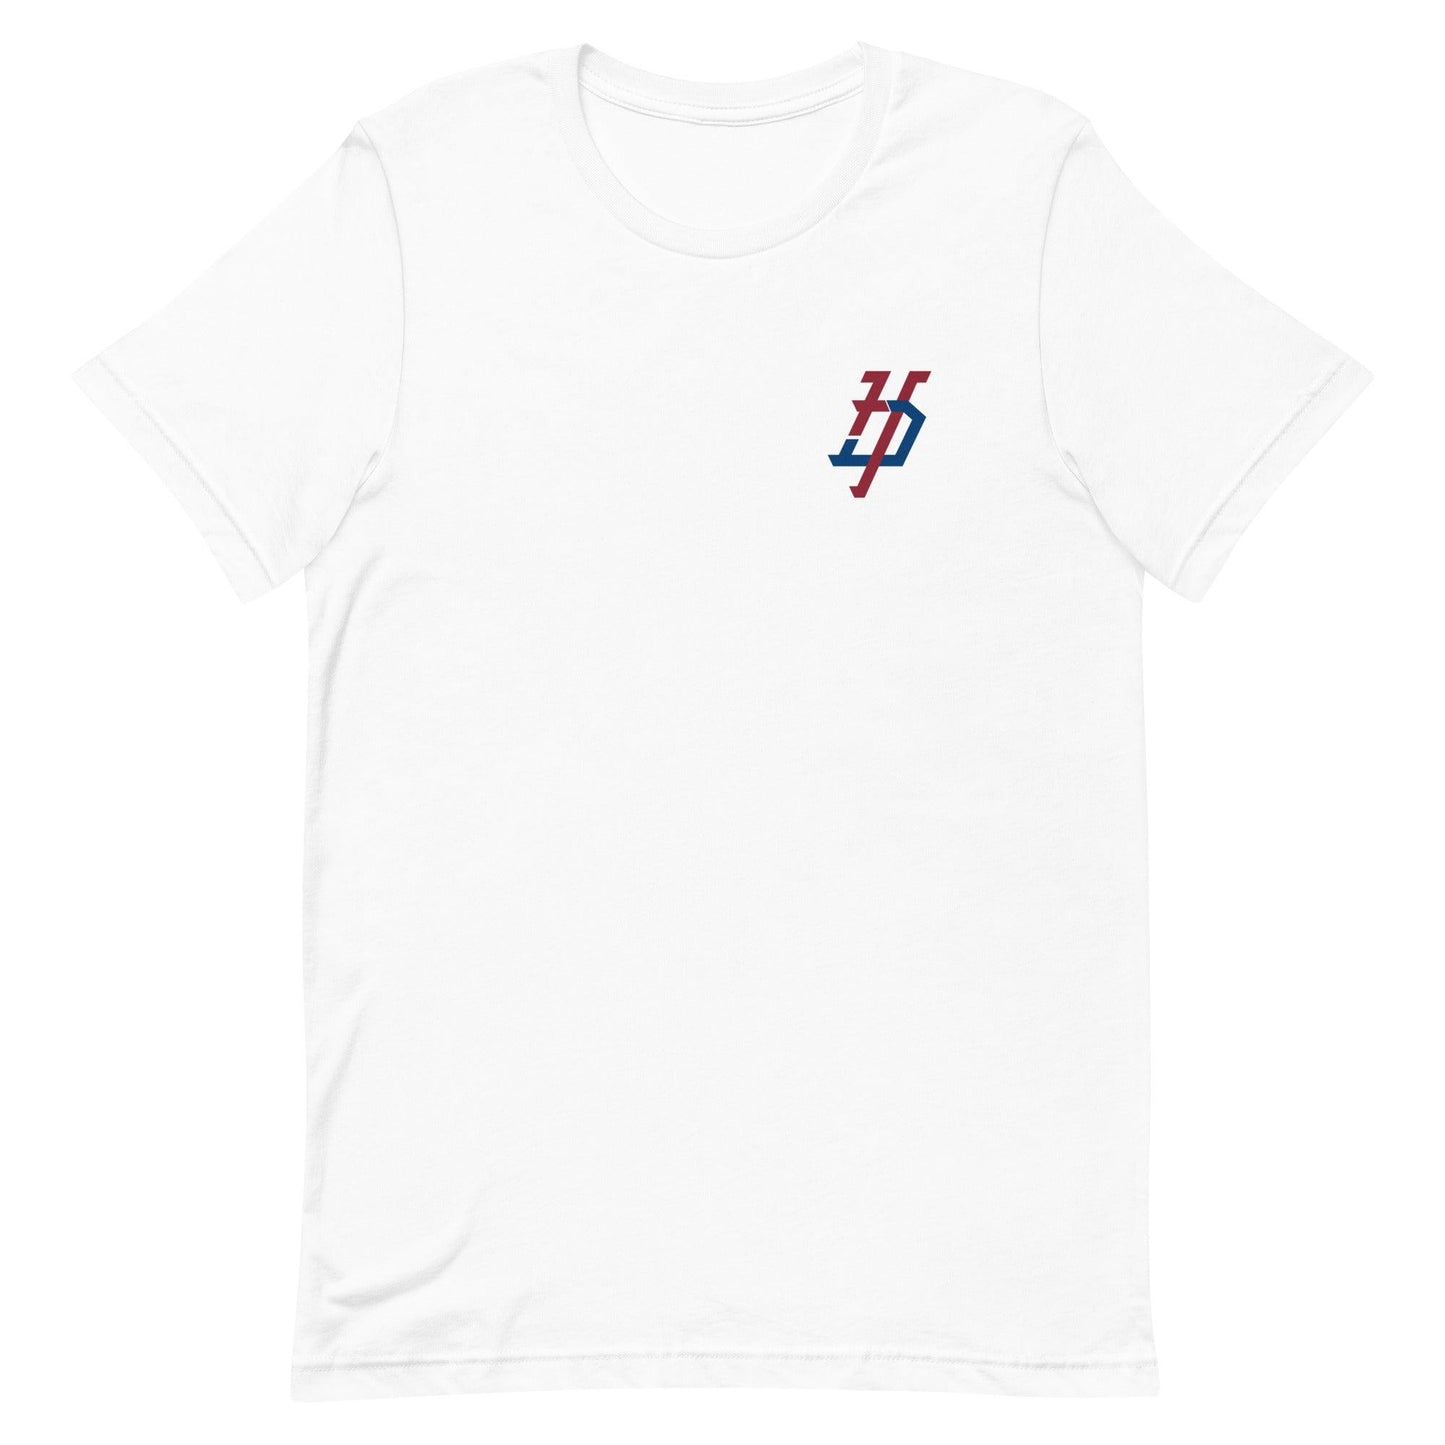 Hasise DuBois "Essentials" t-shirt - Fan Arch